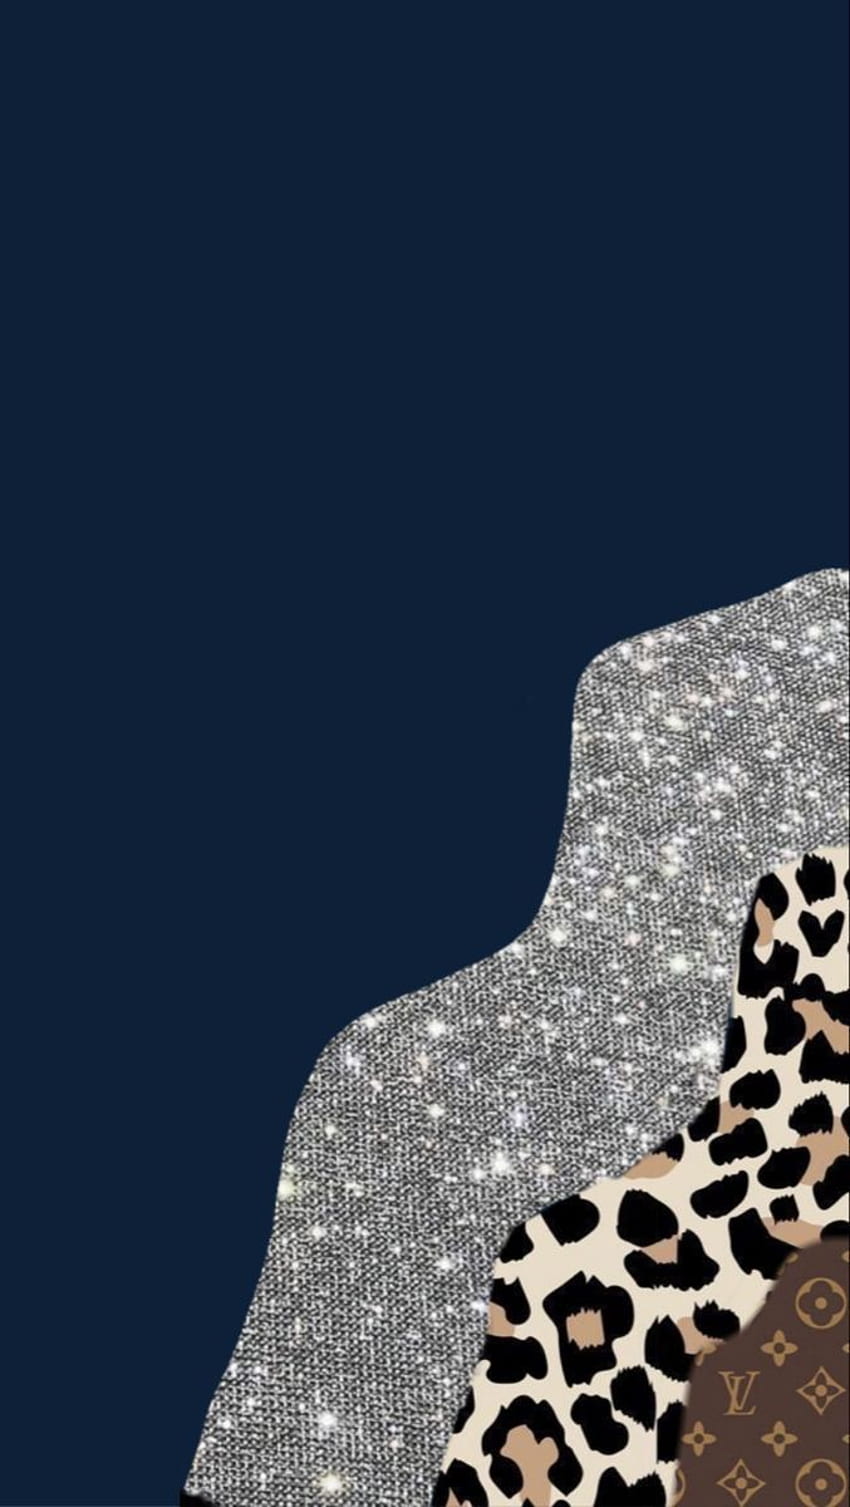 precisionlasasbloggse  Cheetah print wallpaper vsco